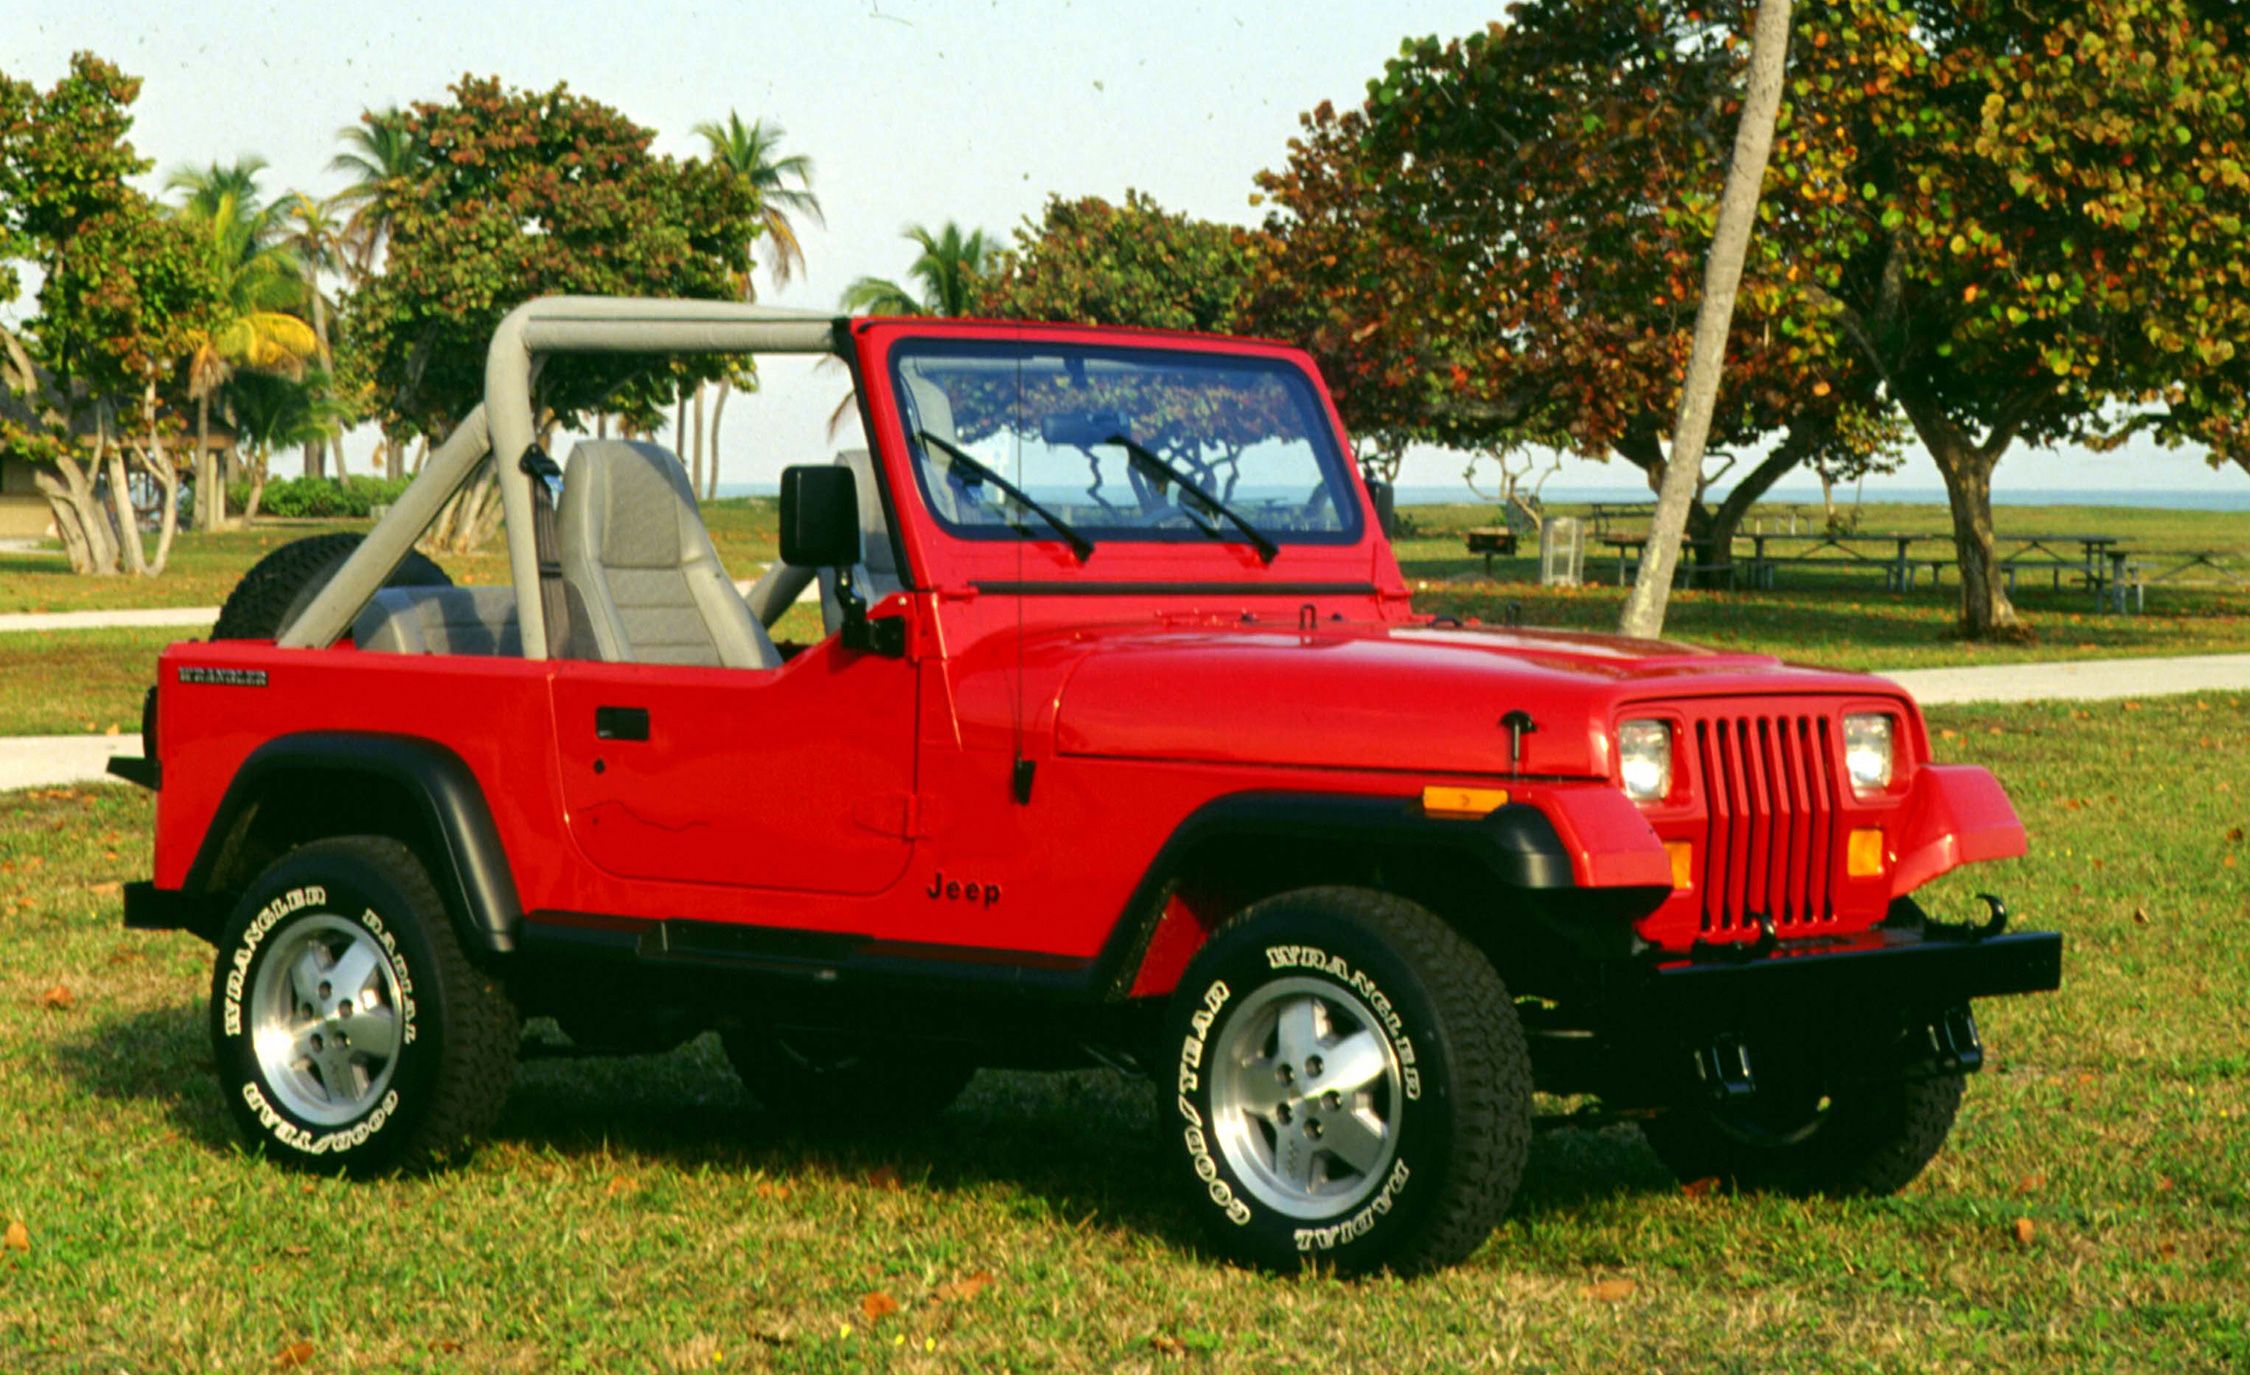 The Original Jeep Wrangler: Where it All Began